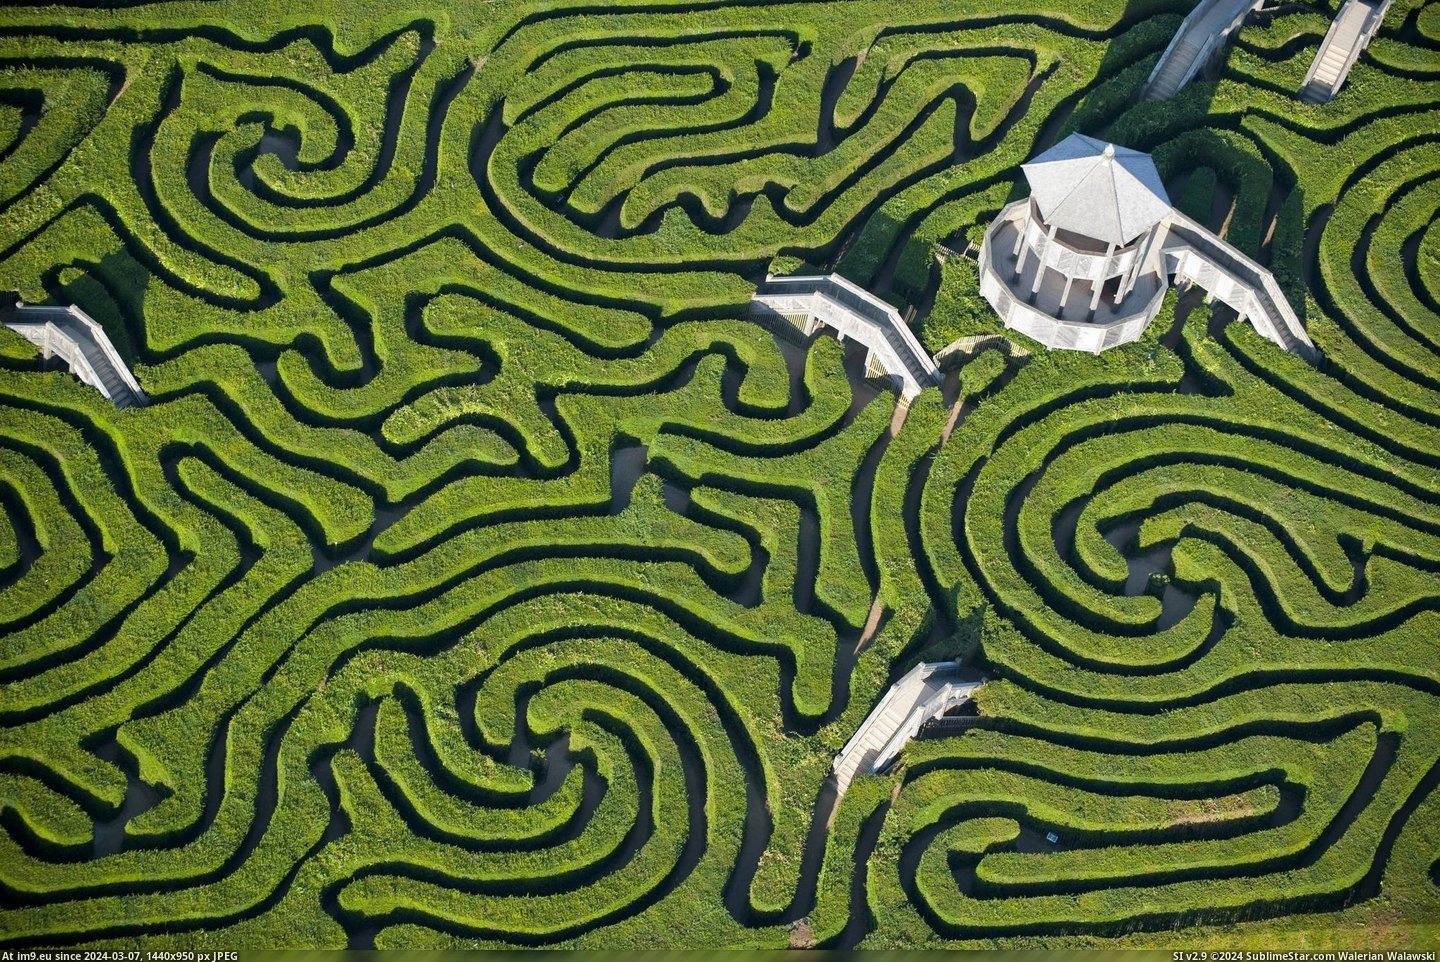 #England #Longleat #Maze [Pics] Maze at Longleat, England Pic. (Image of album My r/PICS favs))